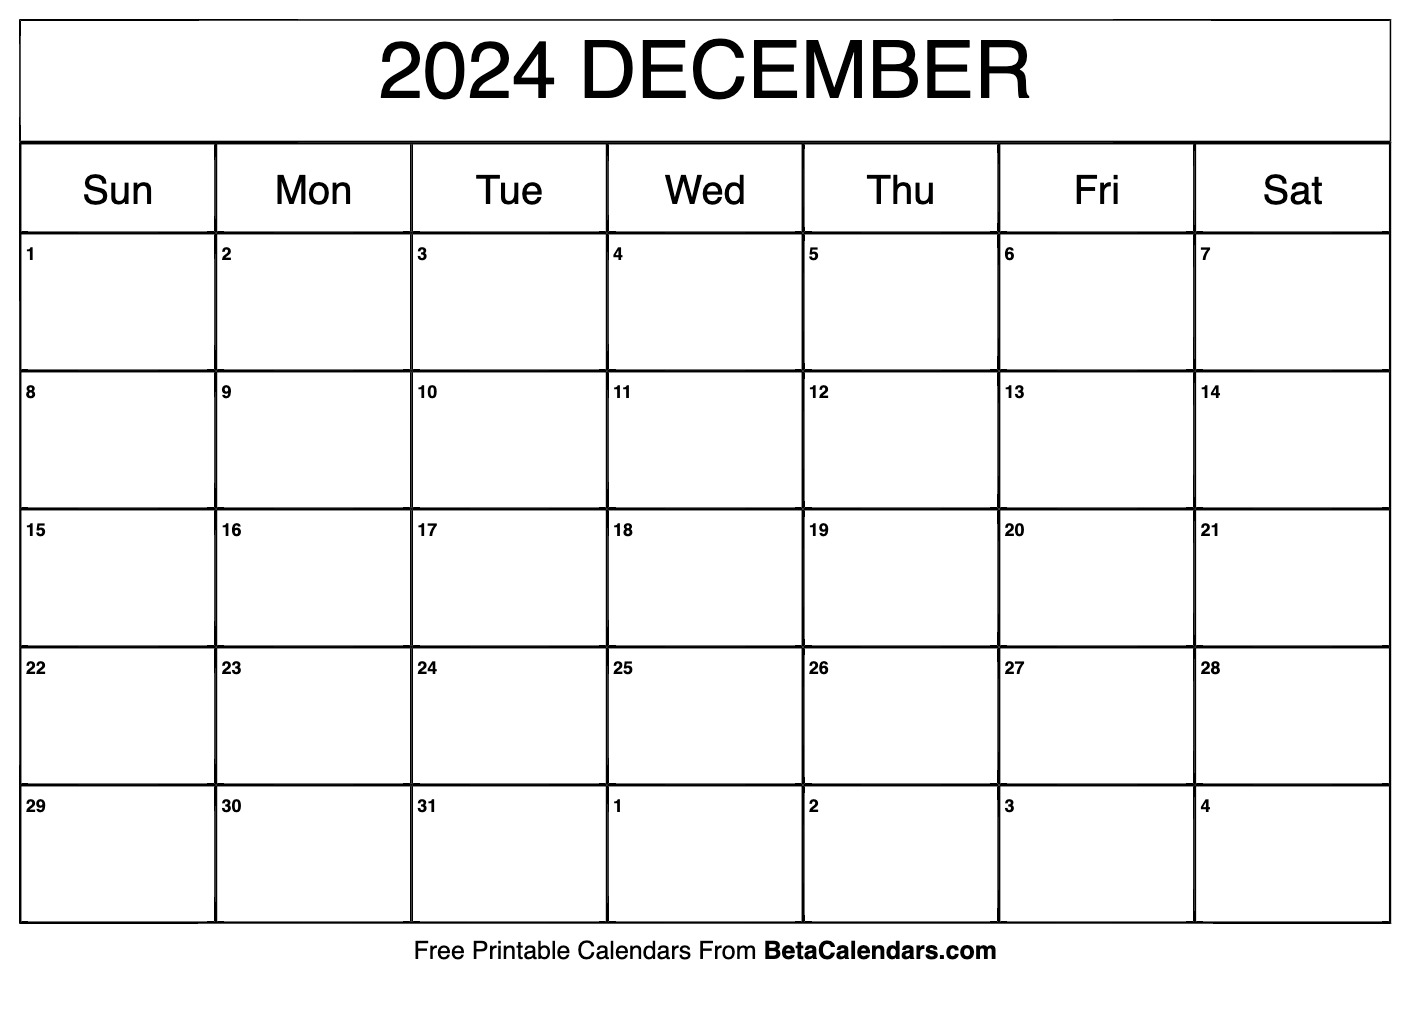 Dec 2024 Calendar Printable Free Blank Disney World Crowd Calendar 2024